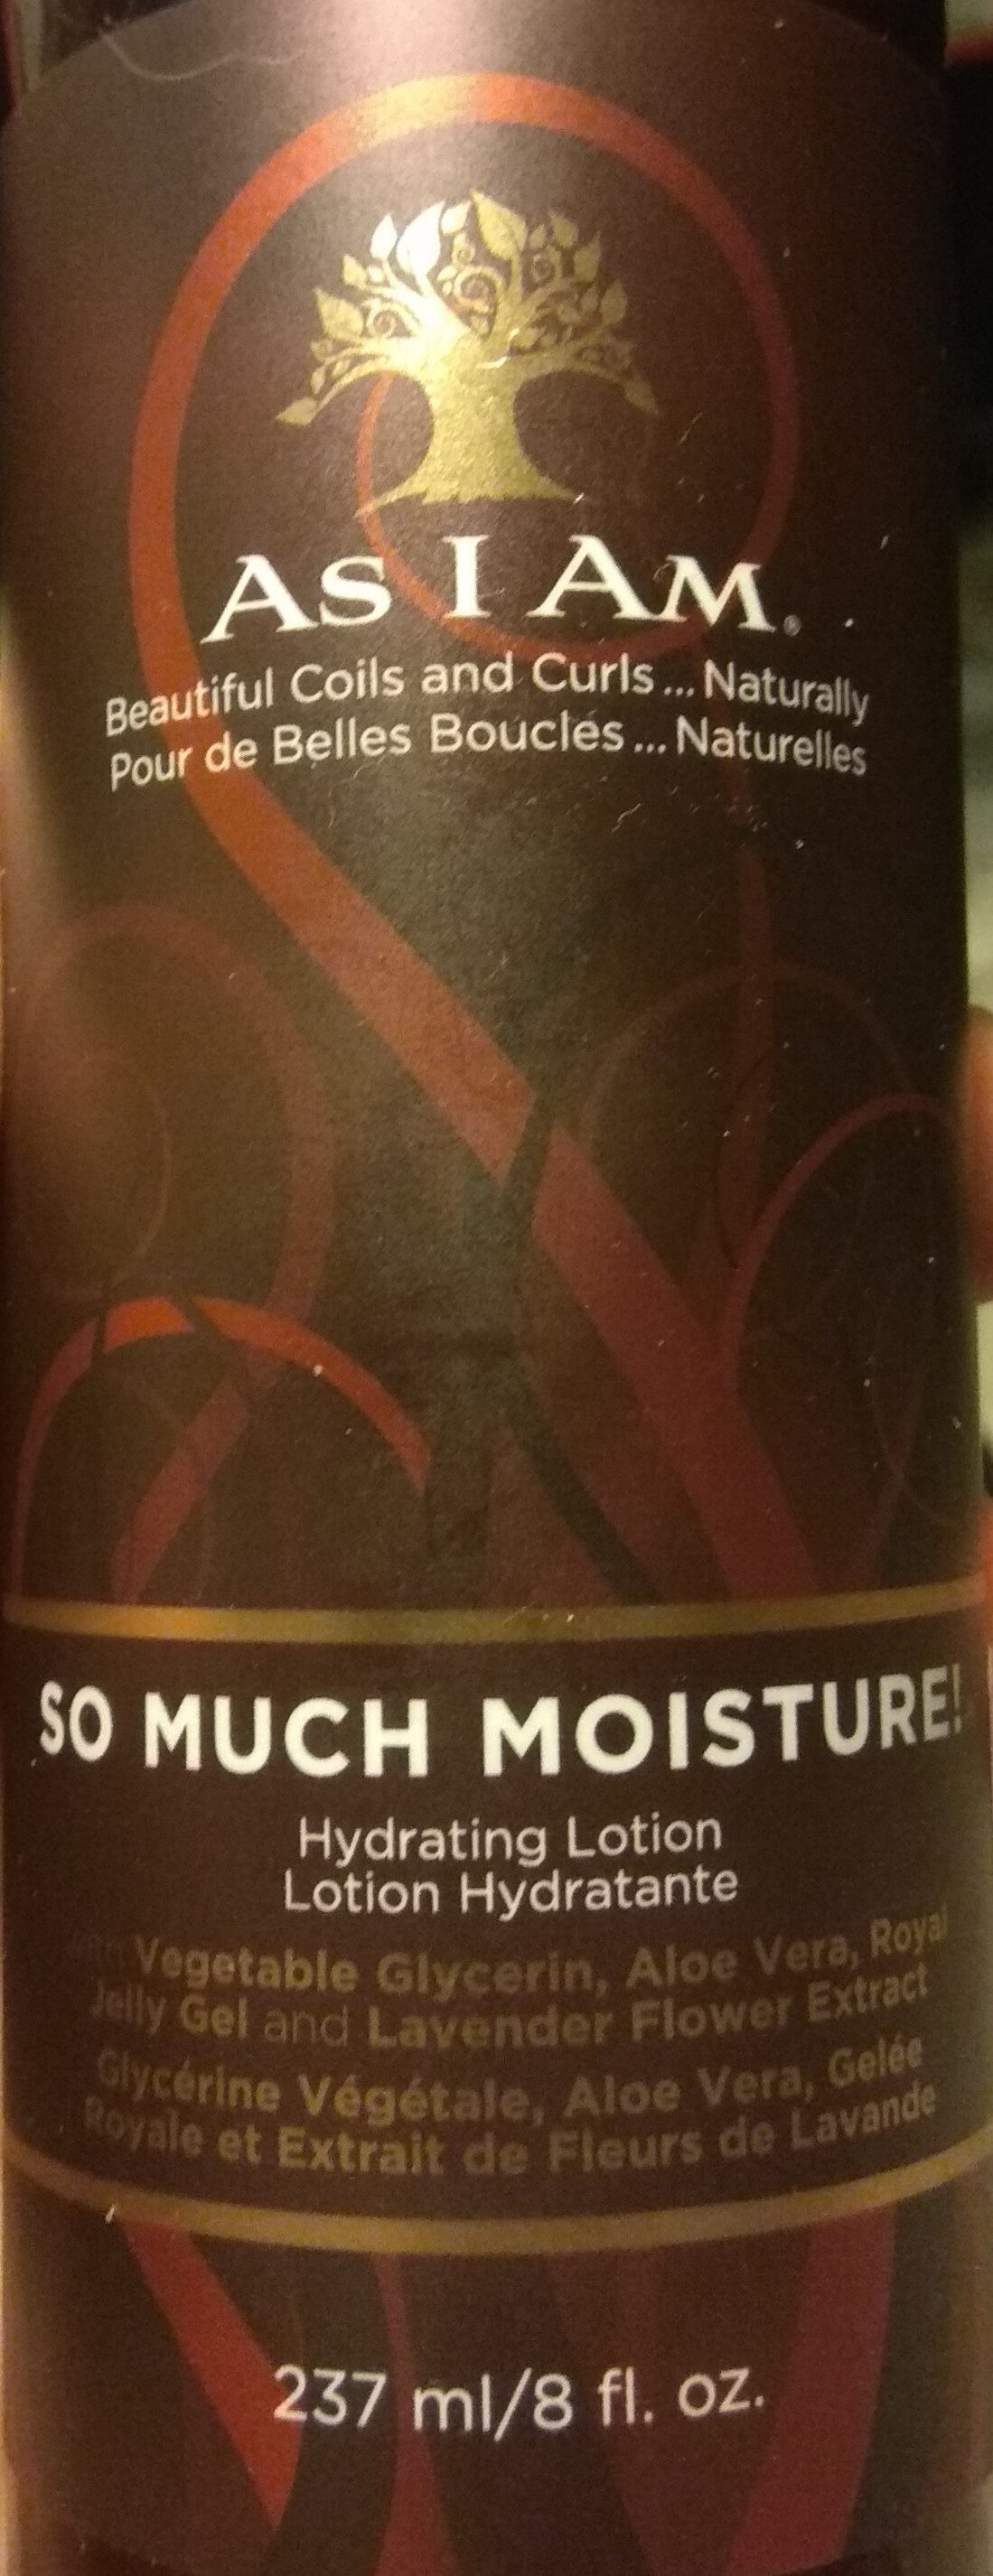 So much moisture! - Produkt - fr